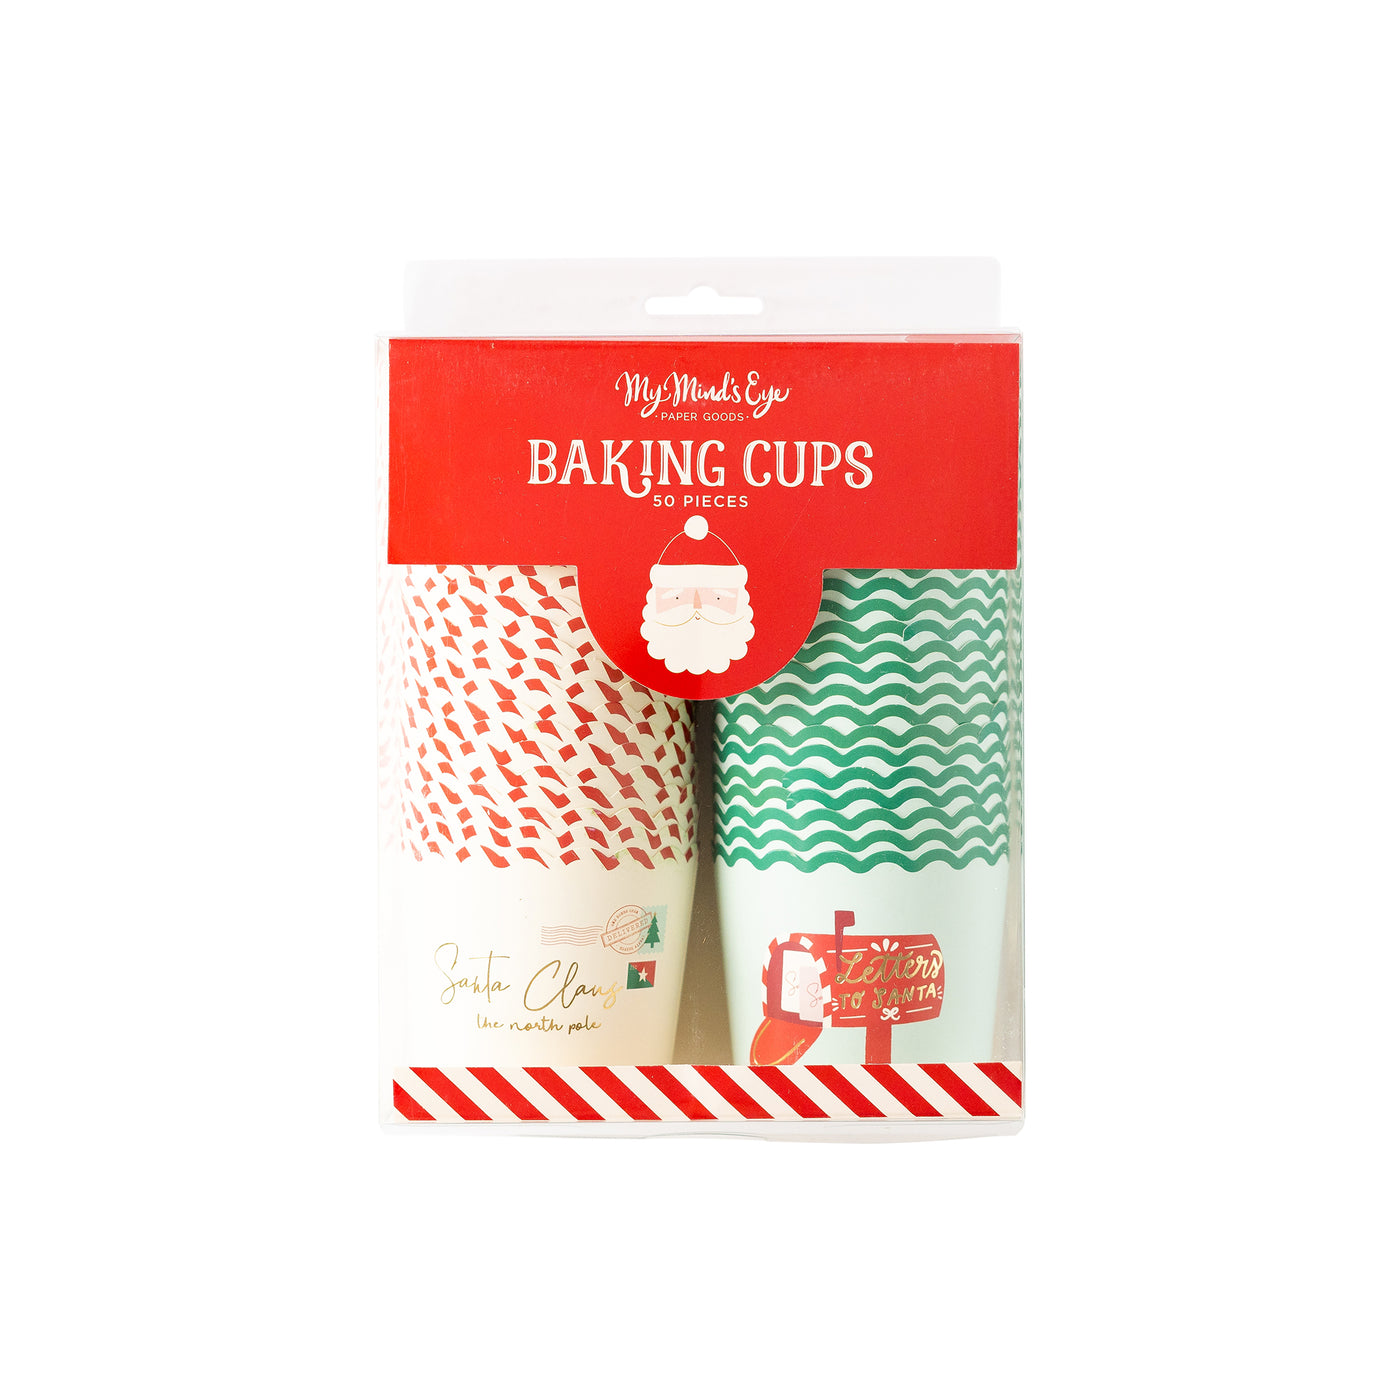 Foiled Dear Santa Baking Cups (50 pcs)